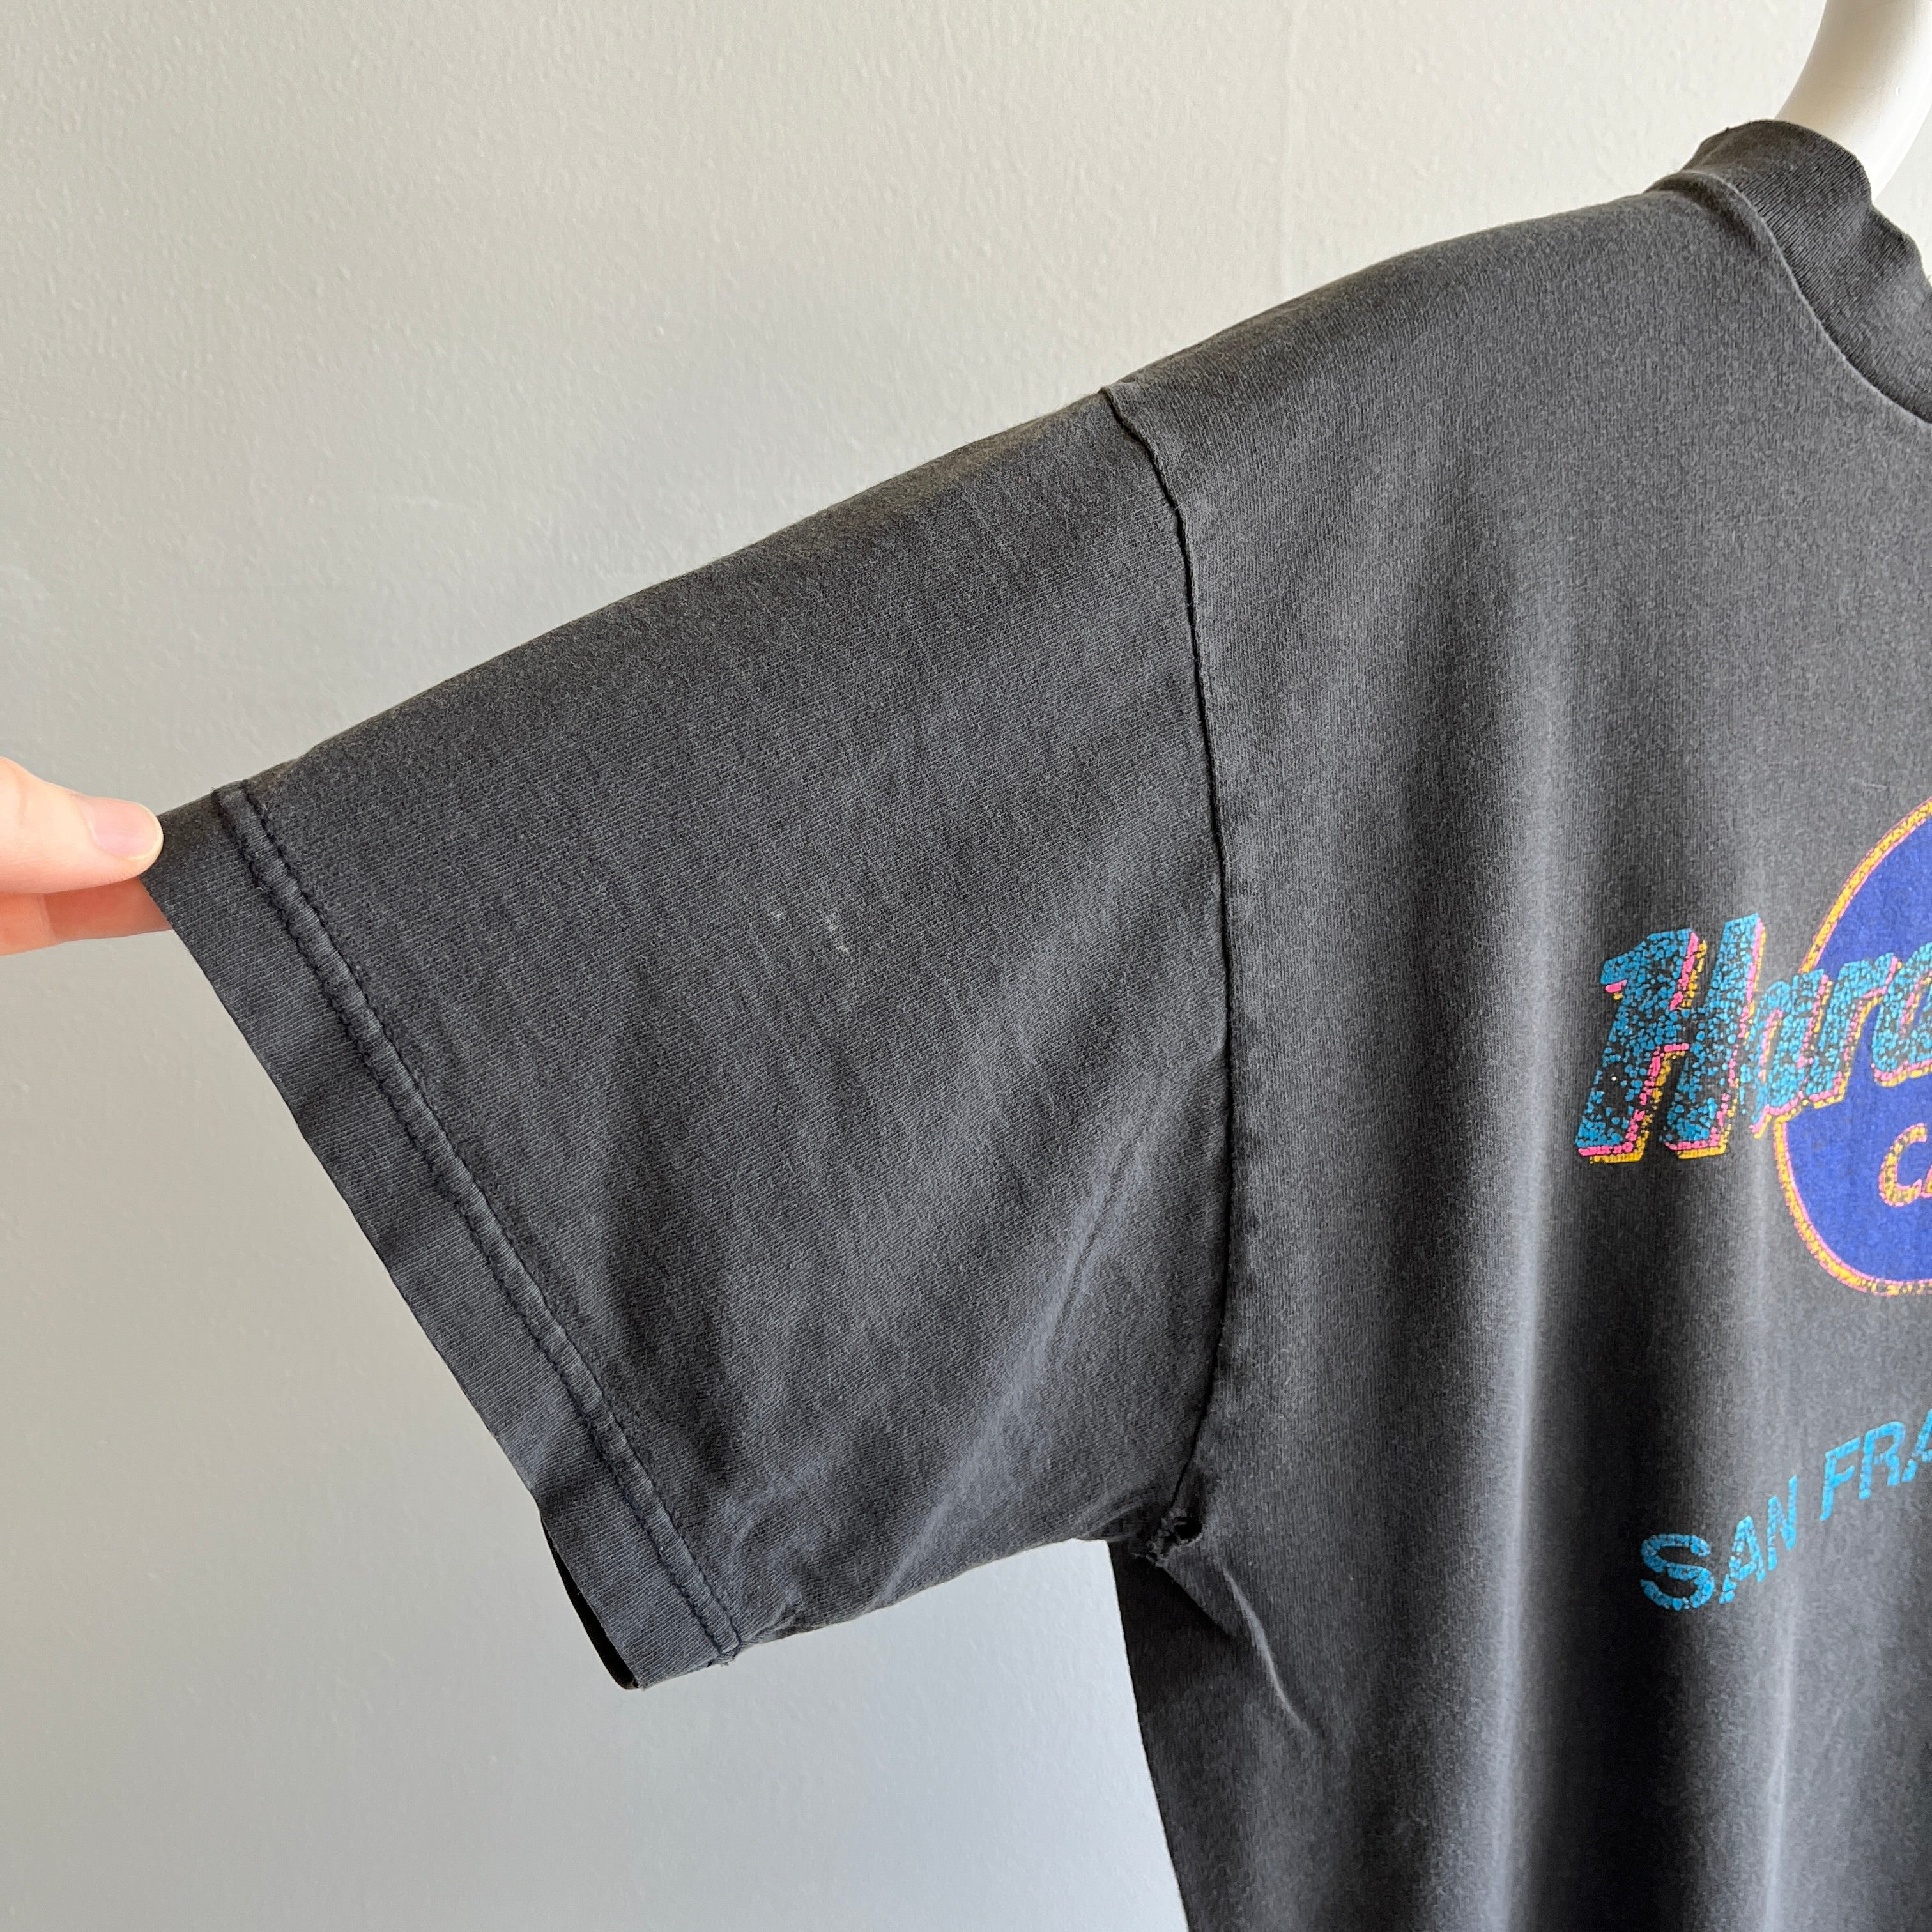 T-shirt San Francisco Beat Up Hard Rock Cafe des années 1990